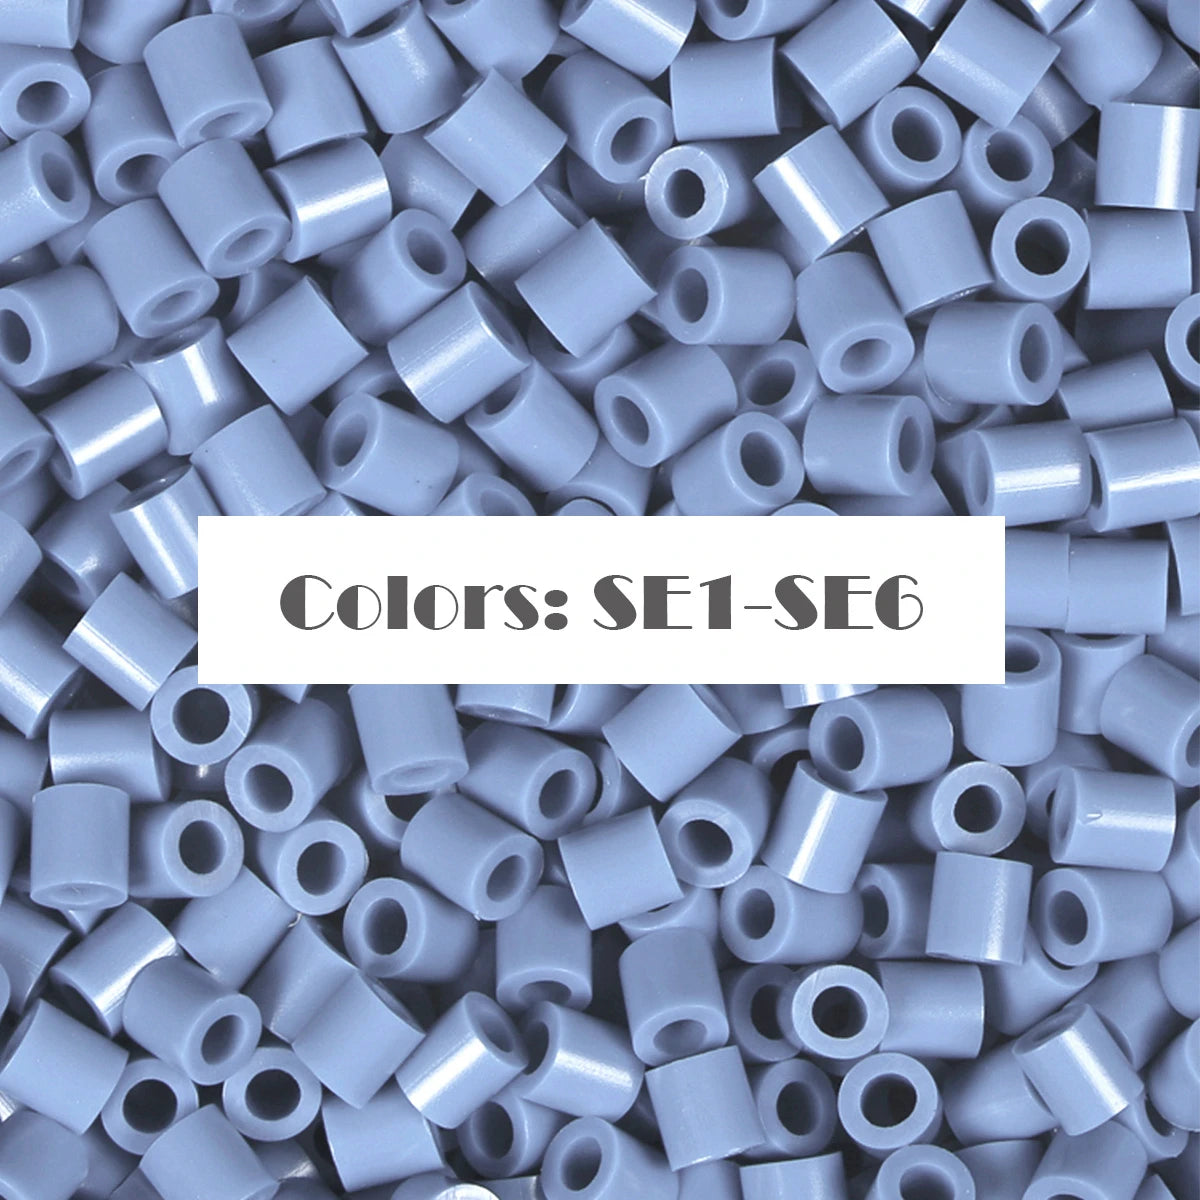 (SE1-SE6) Nueva serie de colores Azul S-1KG a granel